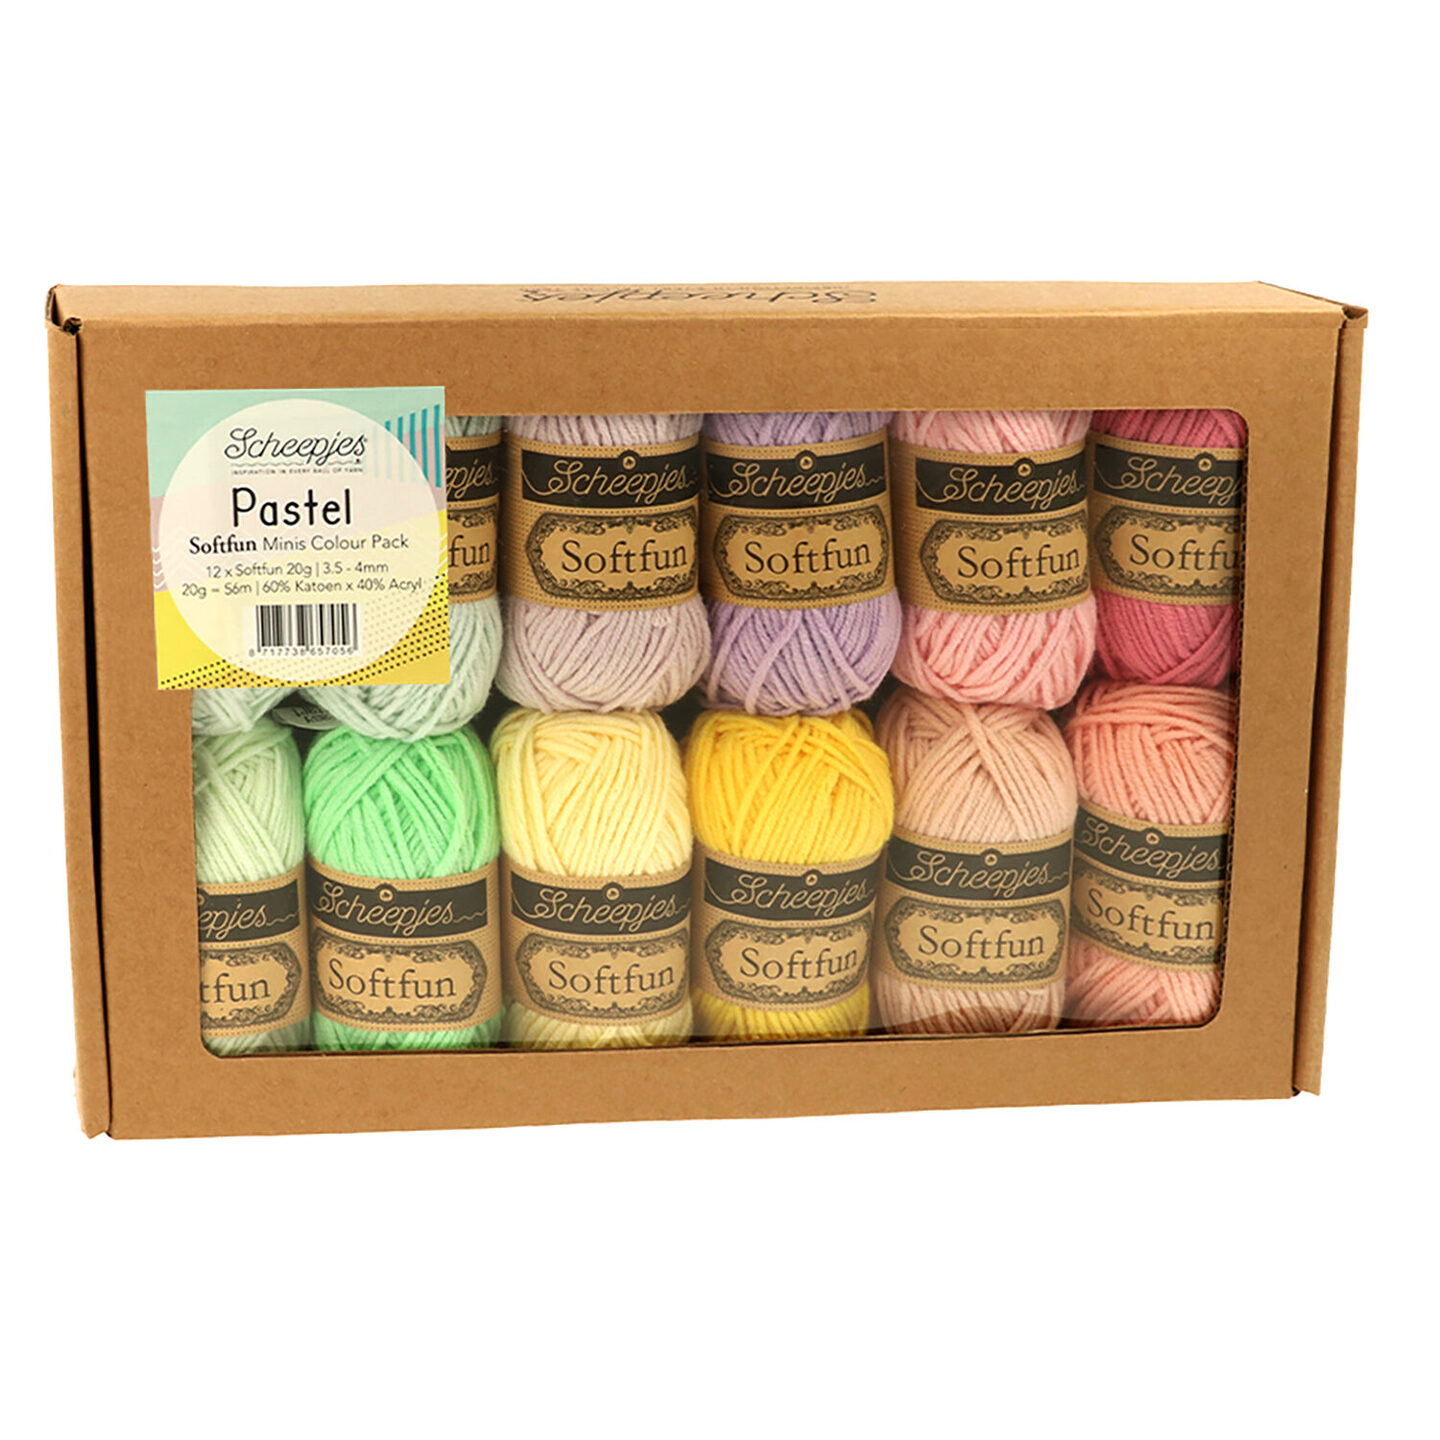 Rainbow Yarn Pack - Pastel